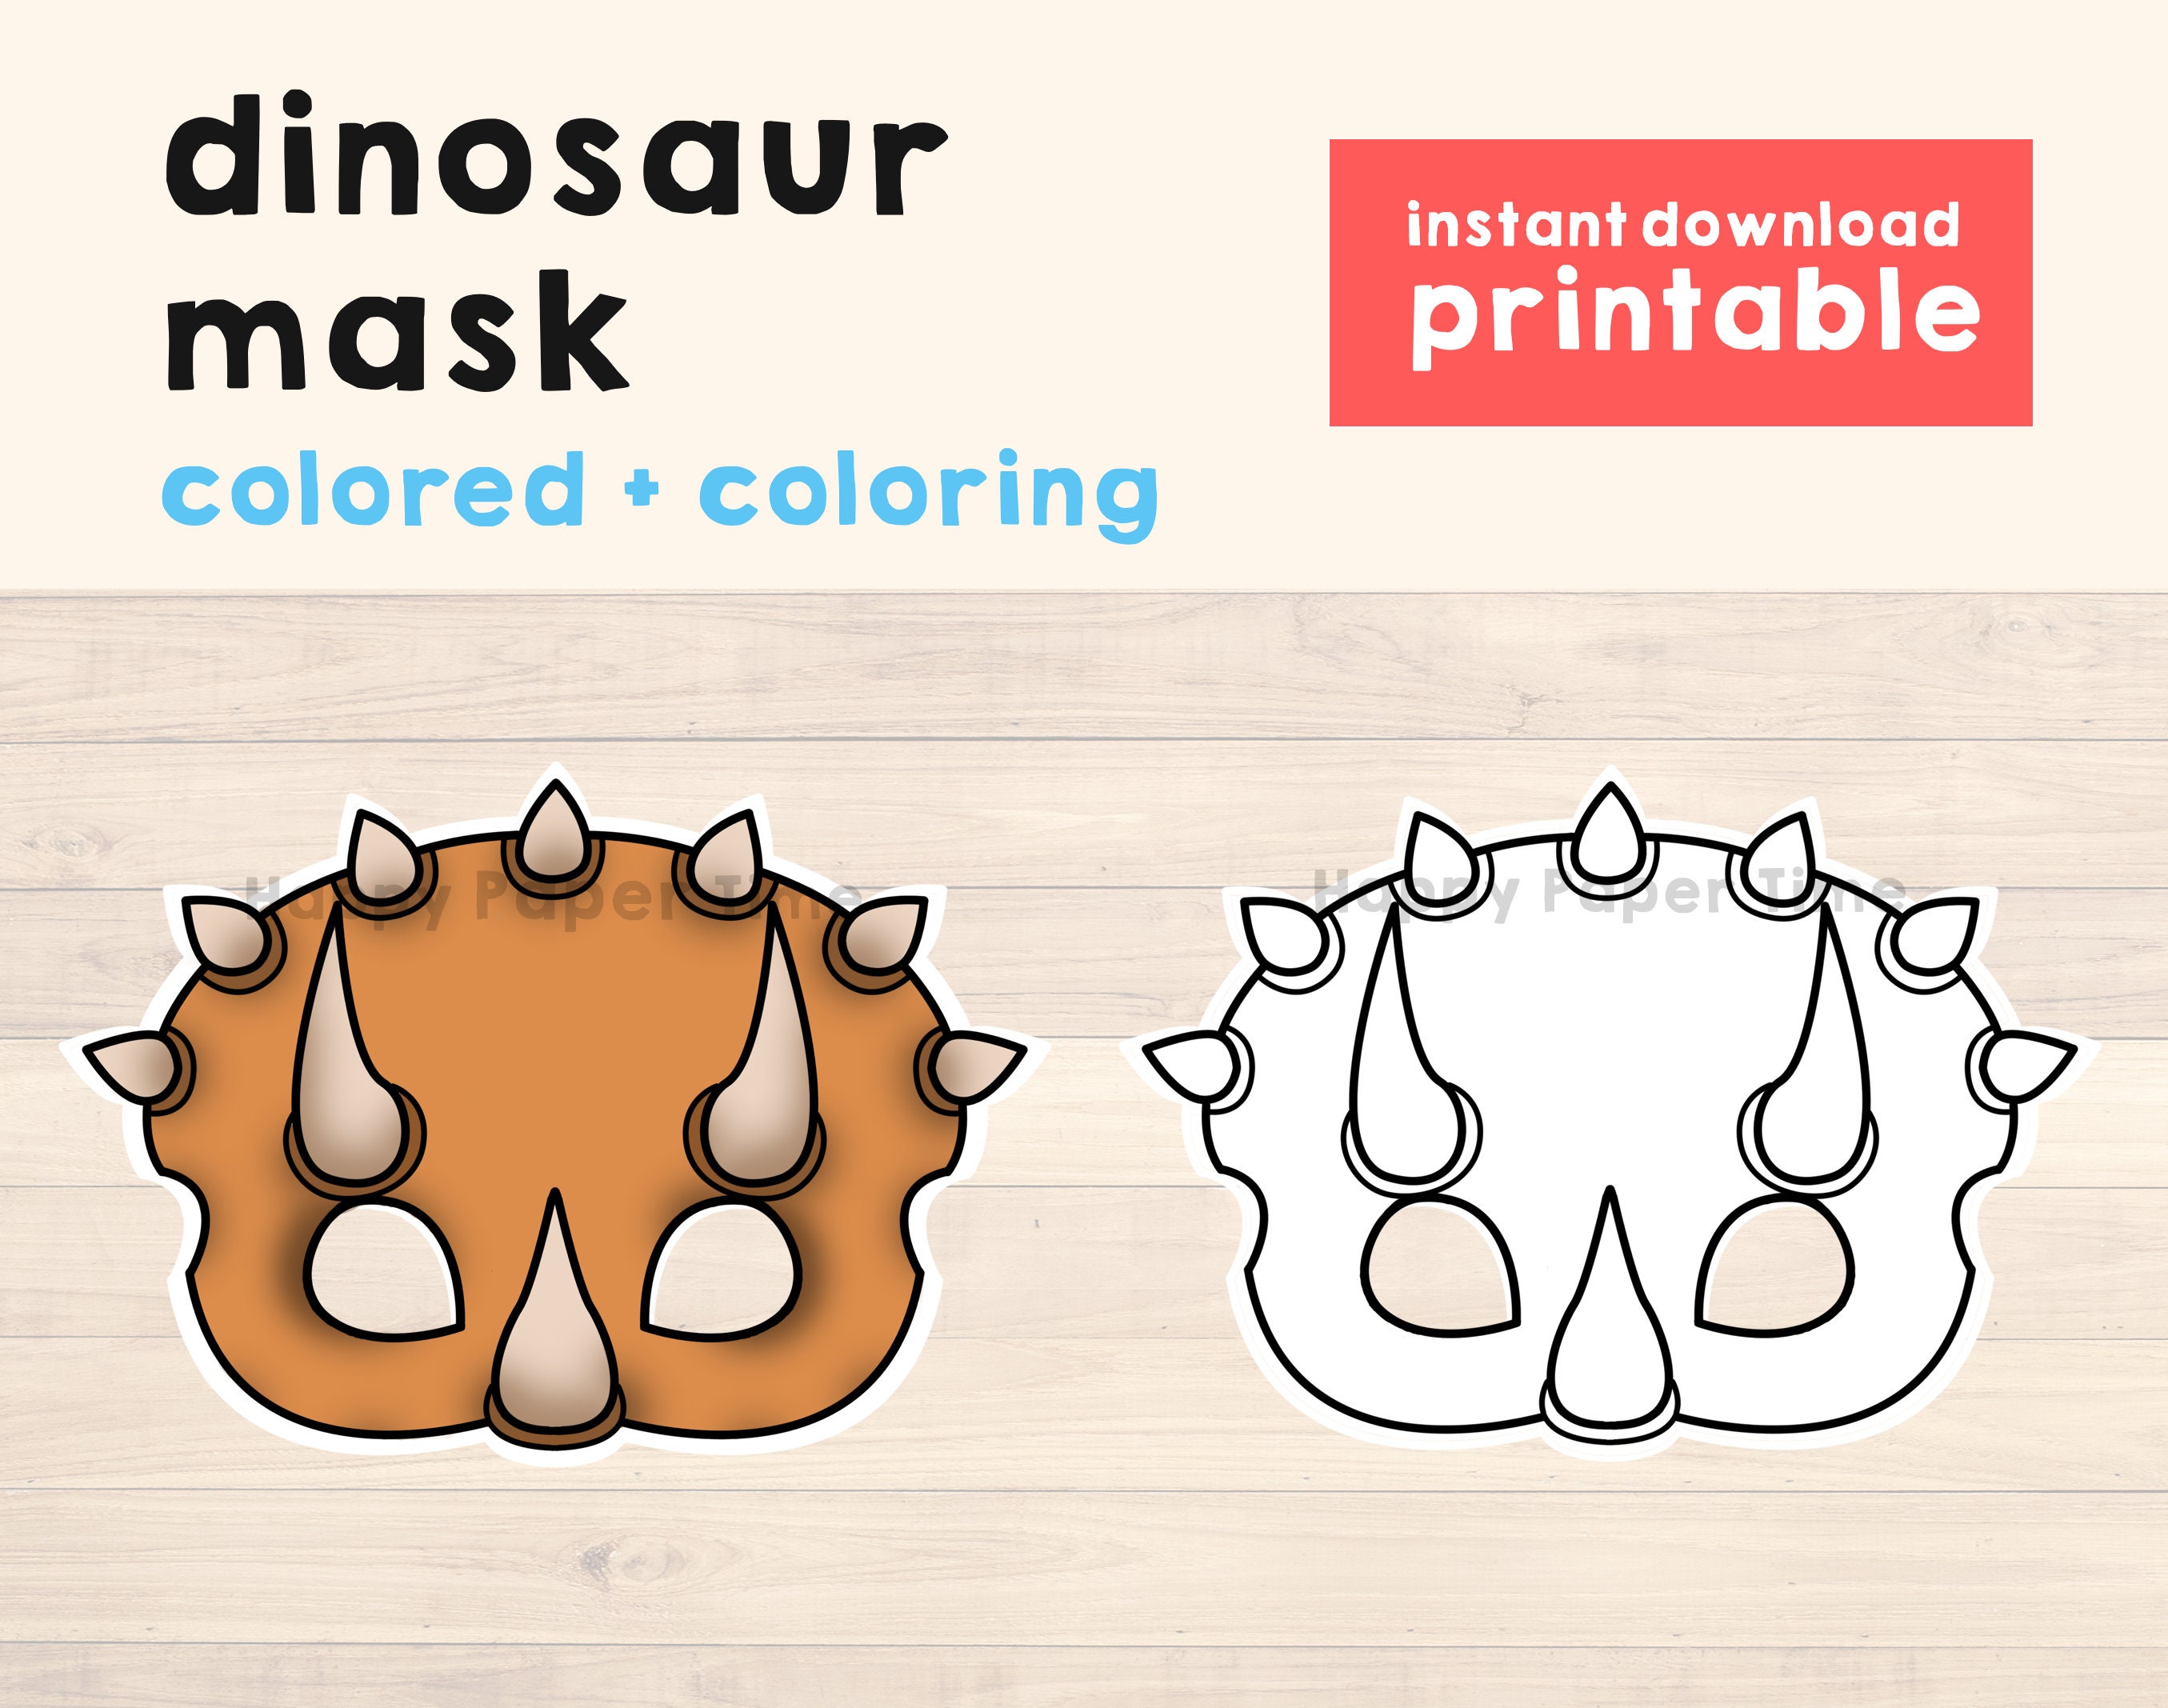 Dinosaur mask dino costume diy animal mask jurassic party favor printable paper craft activity coloring prop kids instant download